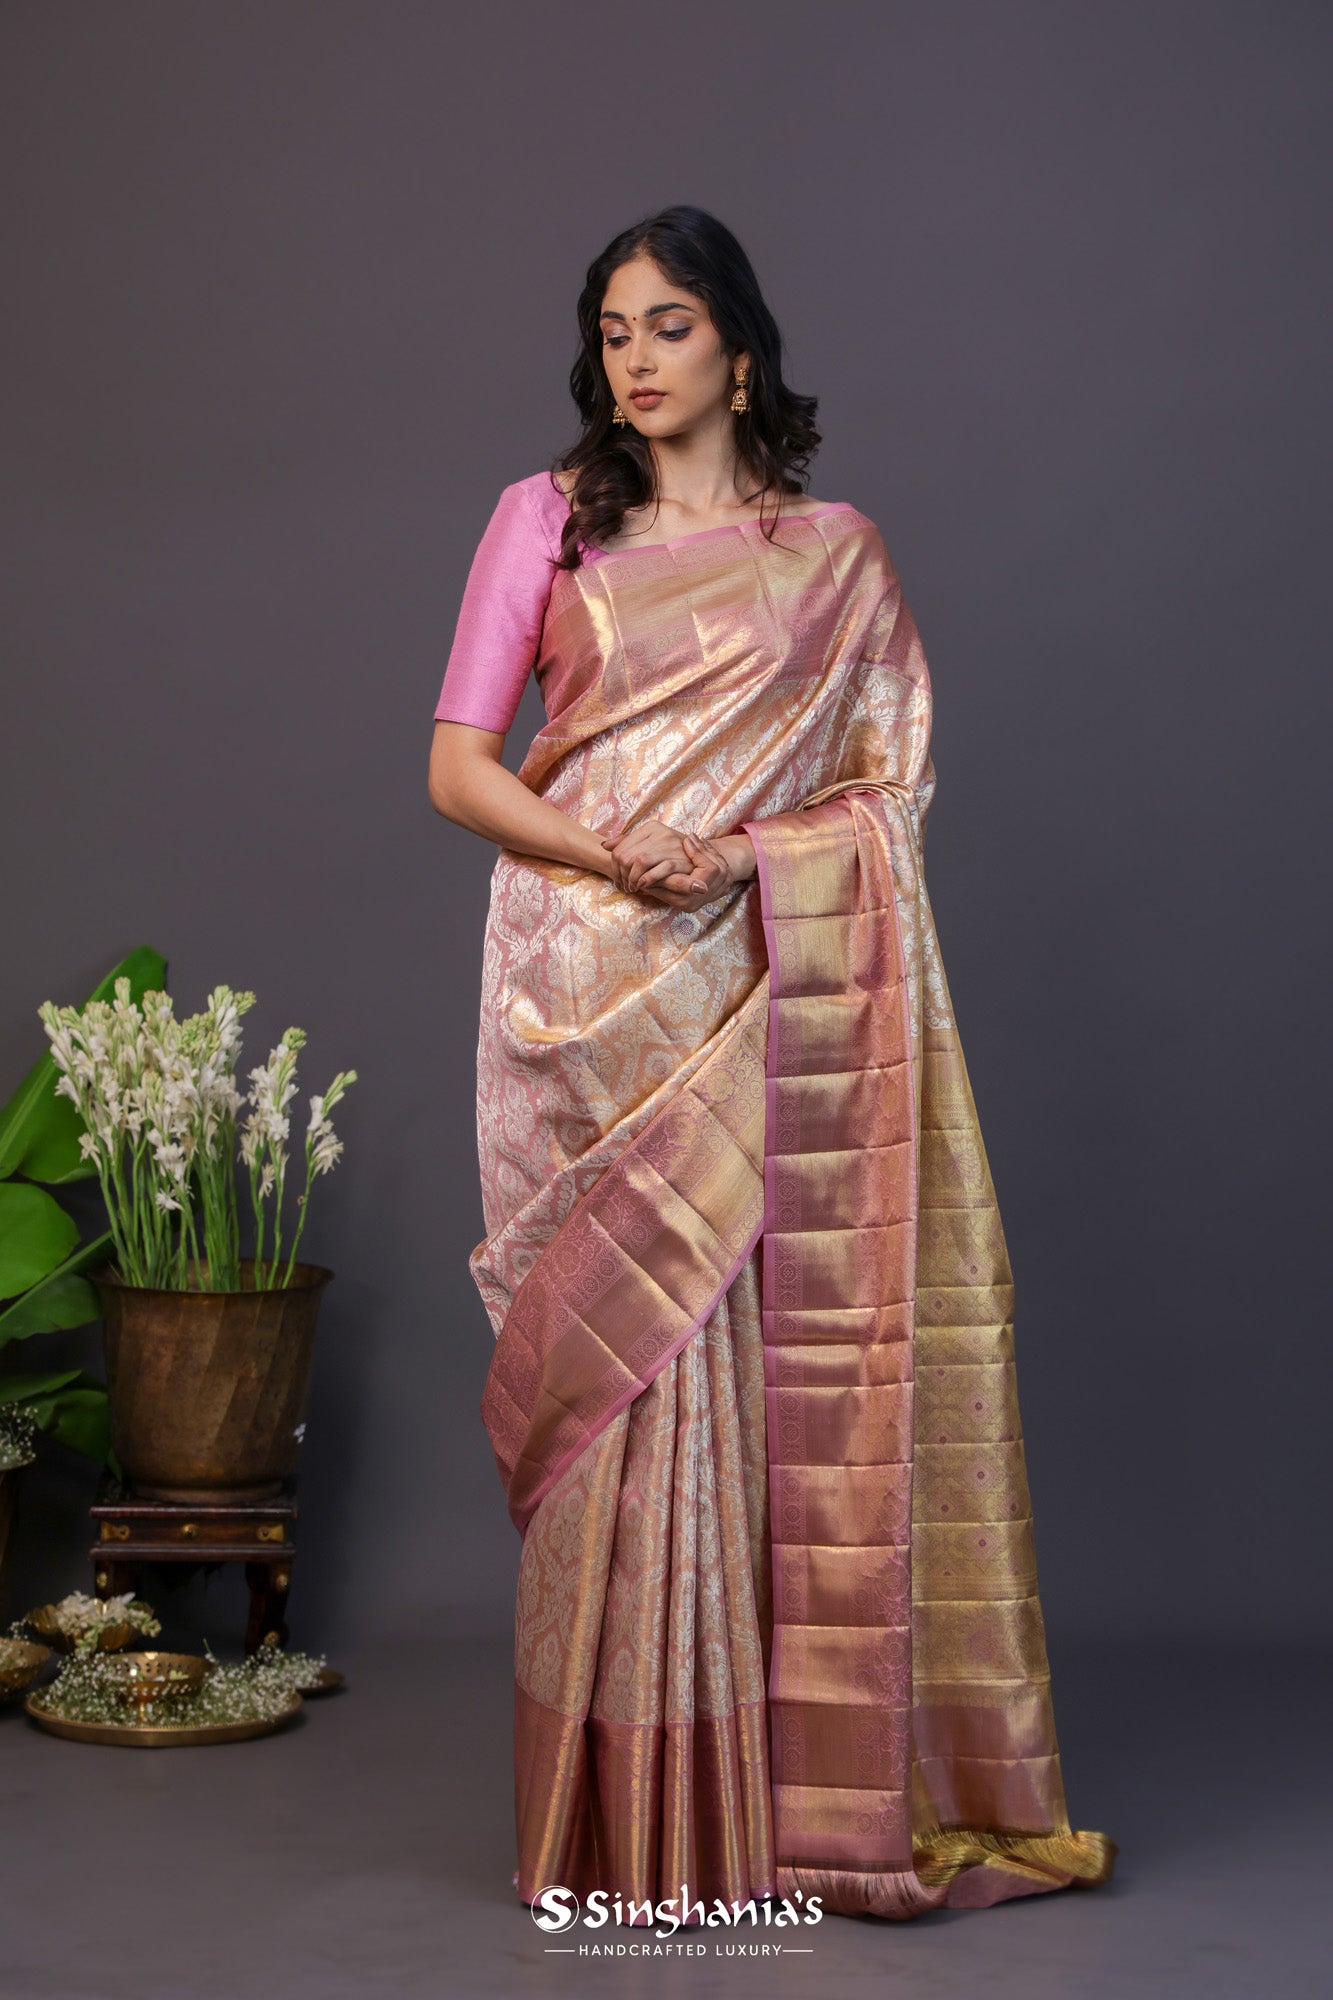 Pastel Pink Tissue Kanjivaram Silk Saree With Big Border Pattern